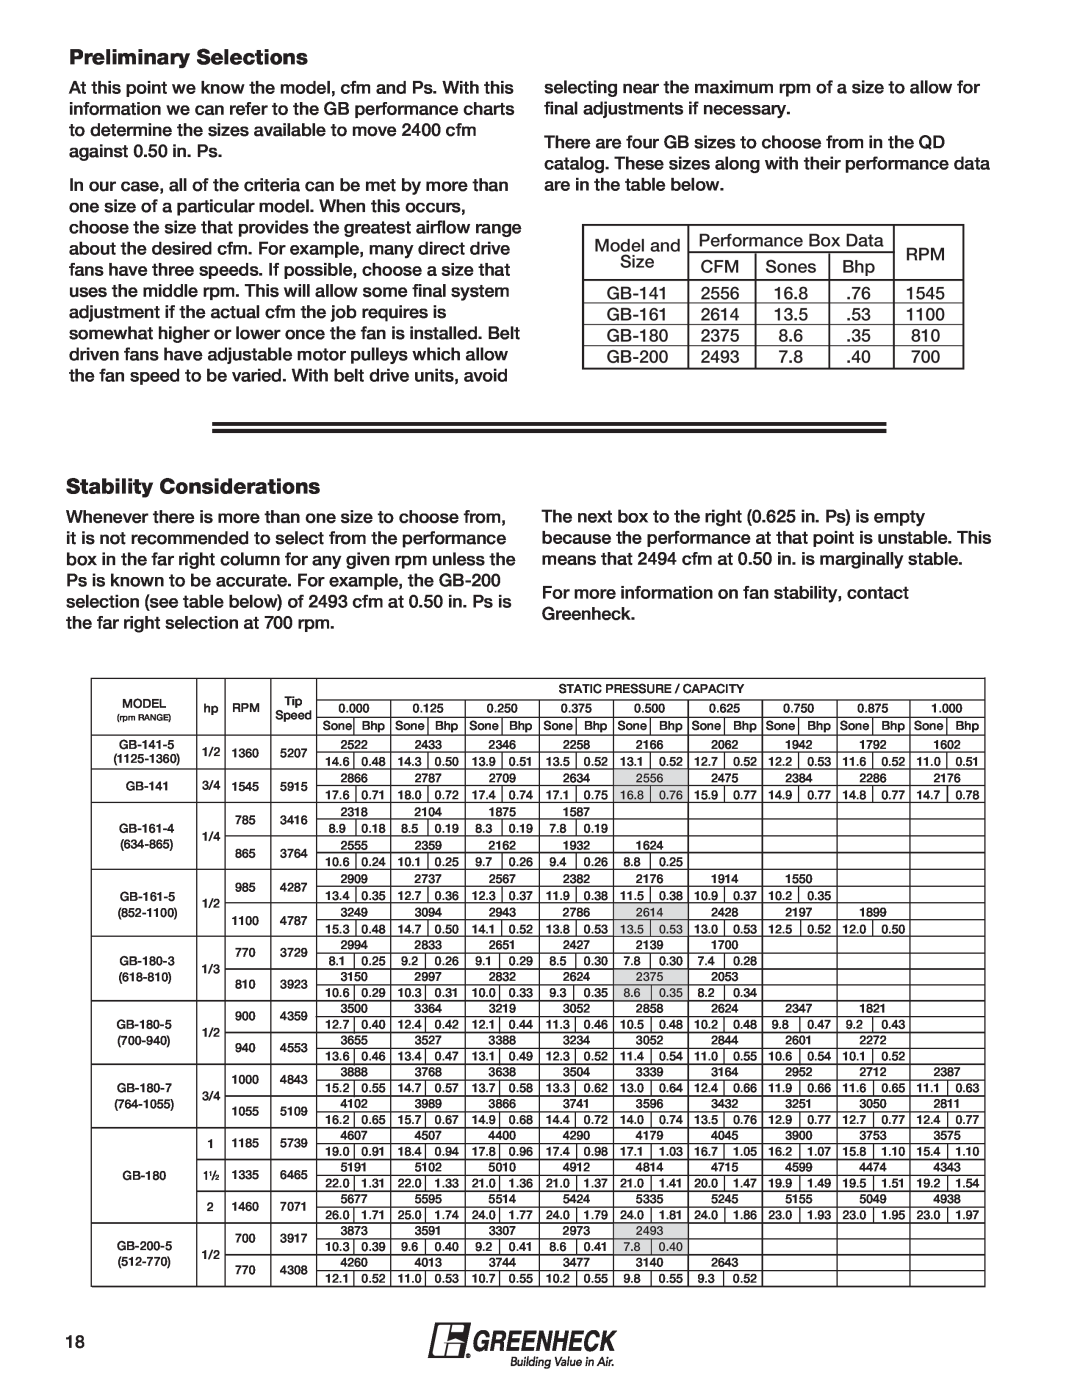 Greenheck Fan 240XP-CUb manual Preliminary Selections, Stability Considerations 